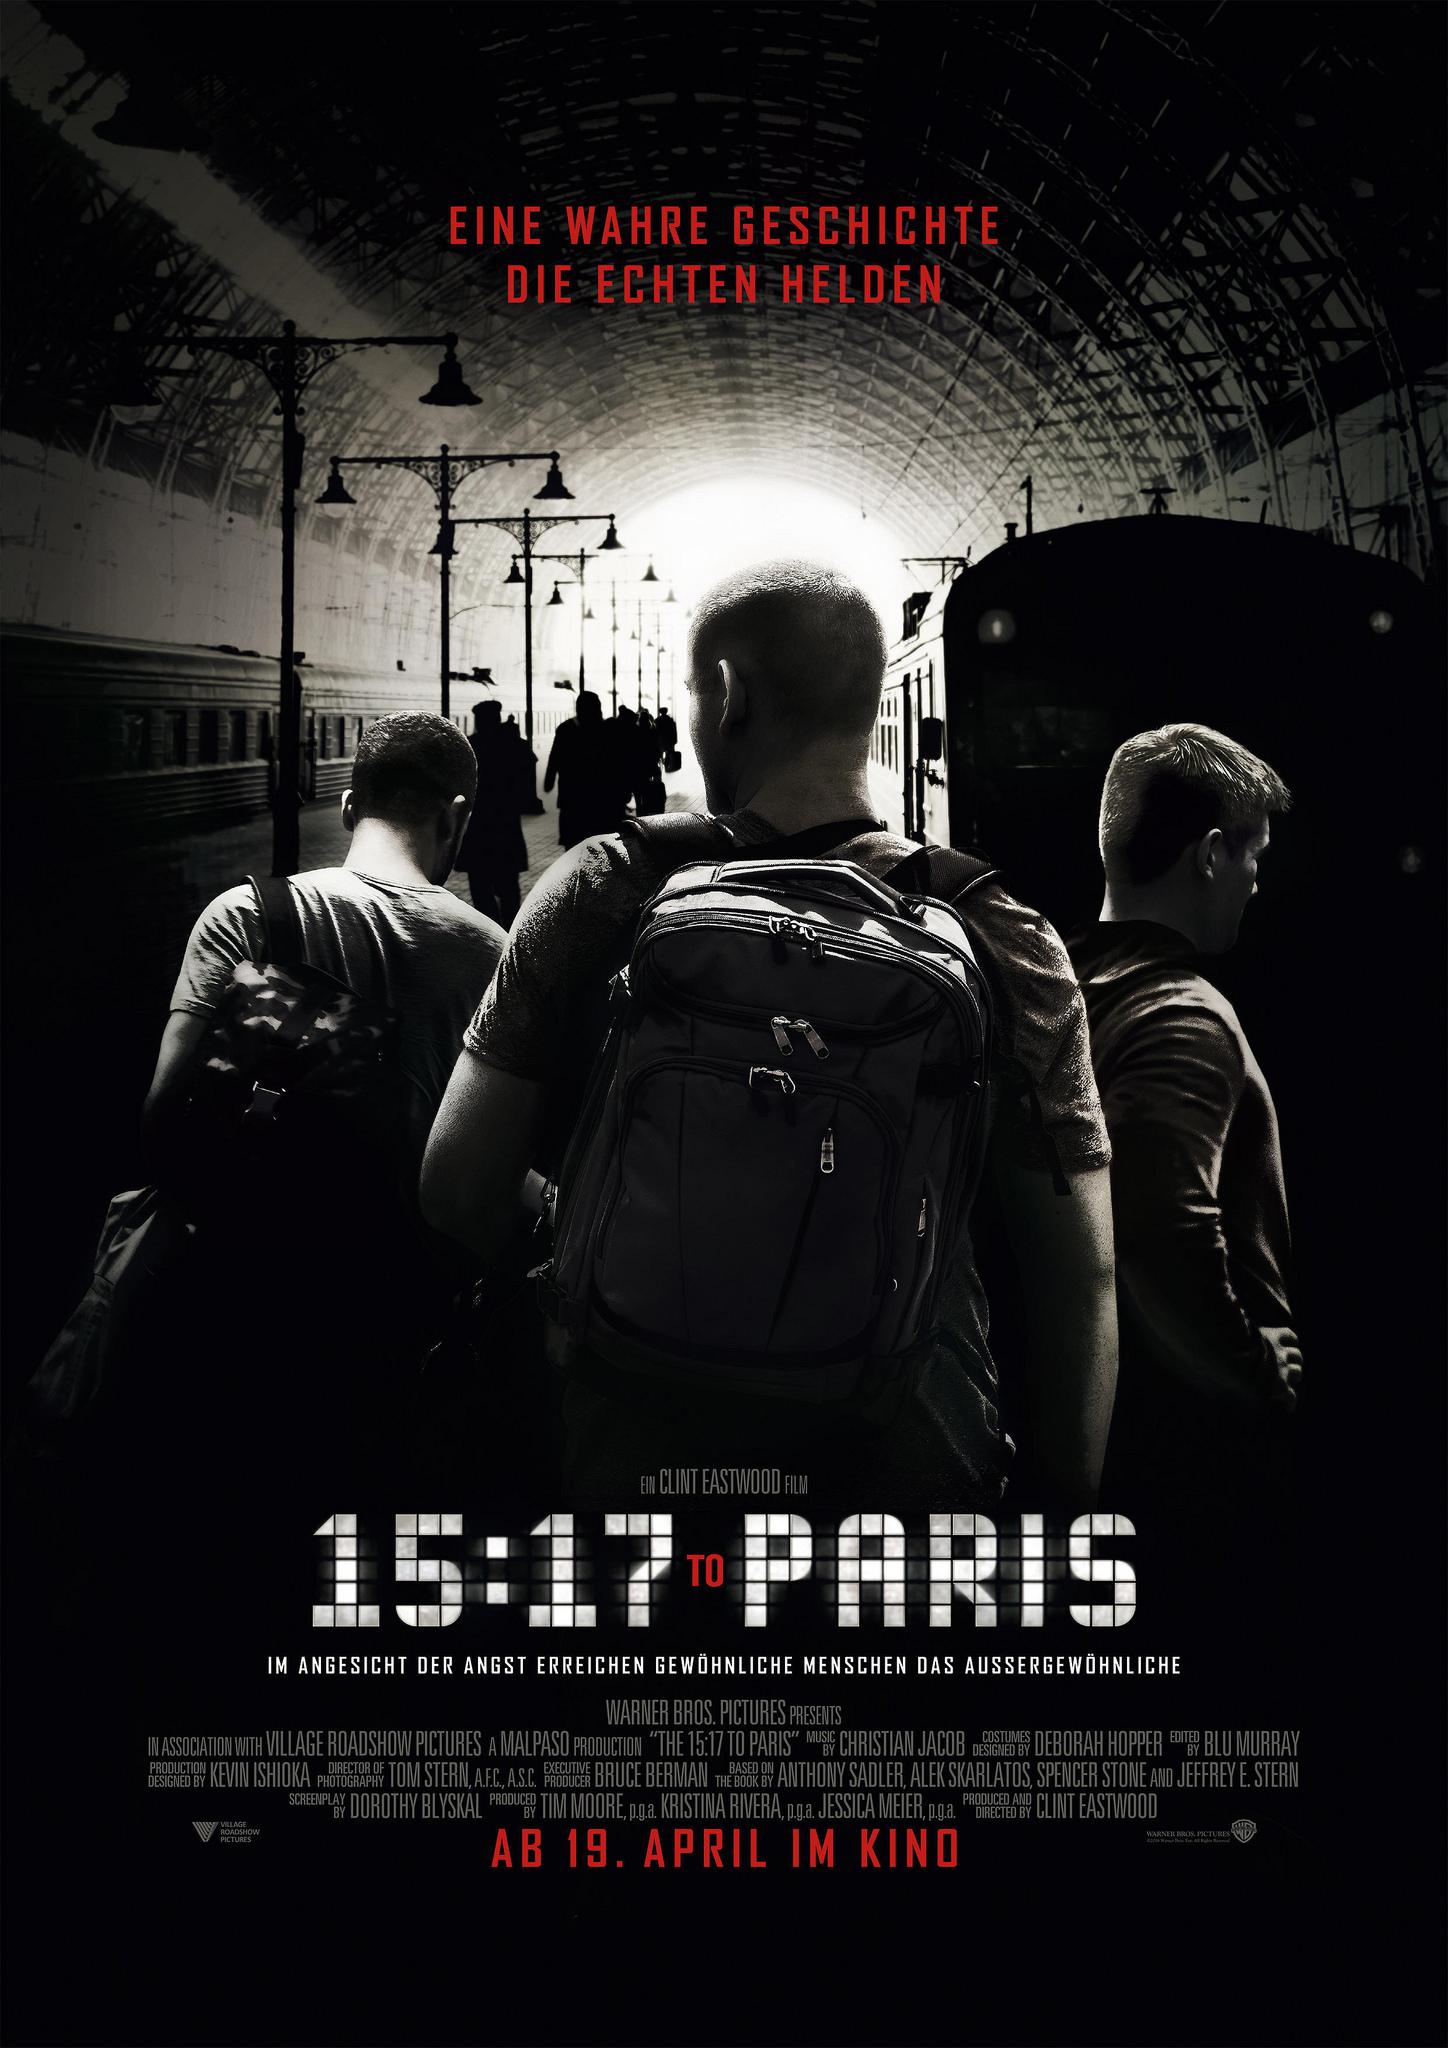 Постер фильма Поезд на Париж | The 15:17 to Paris 